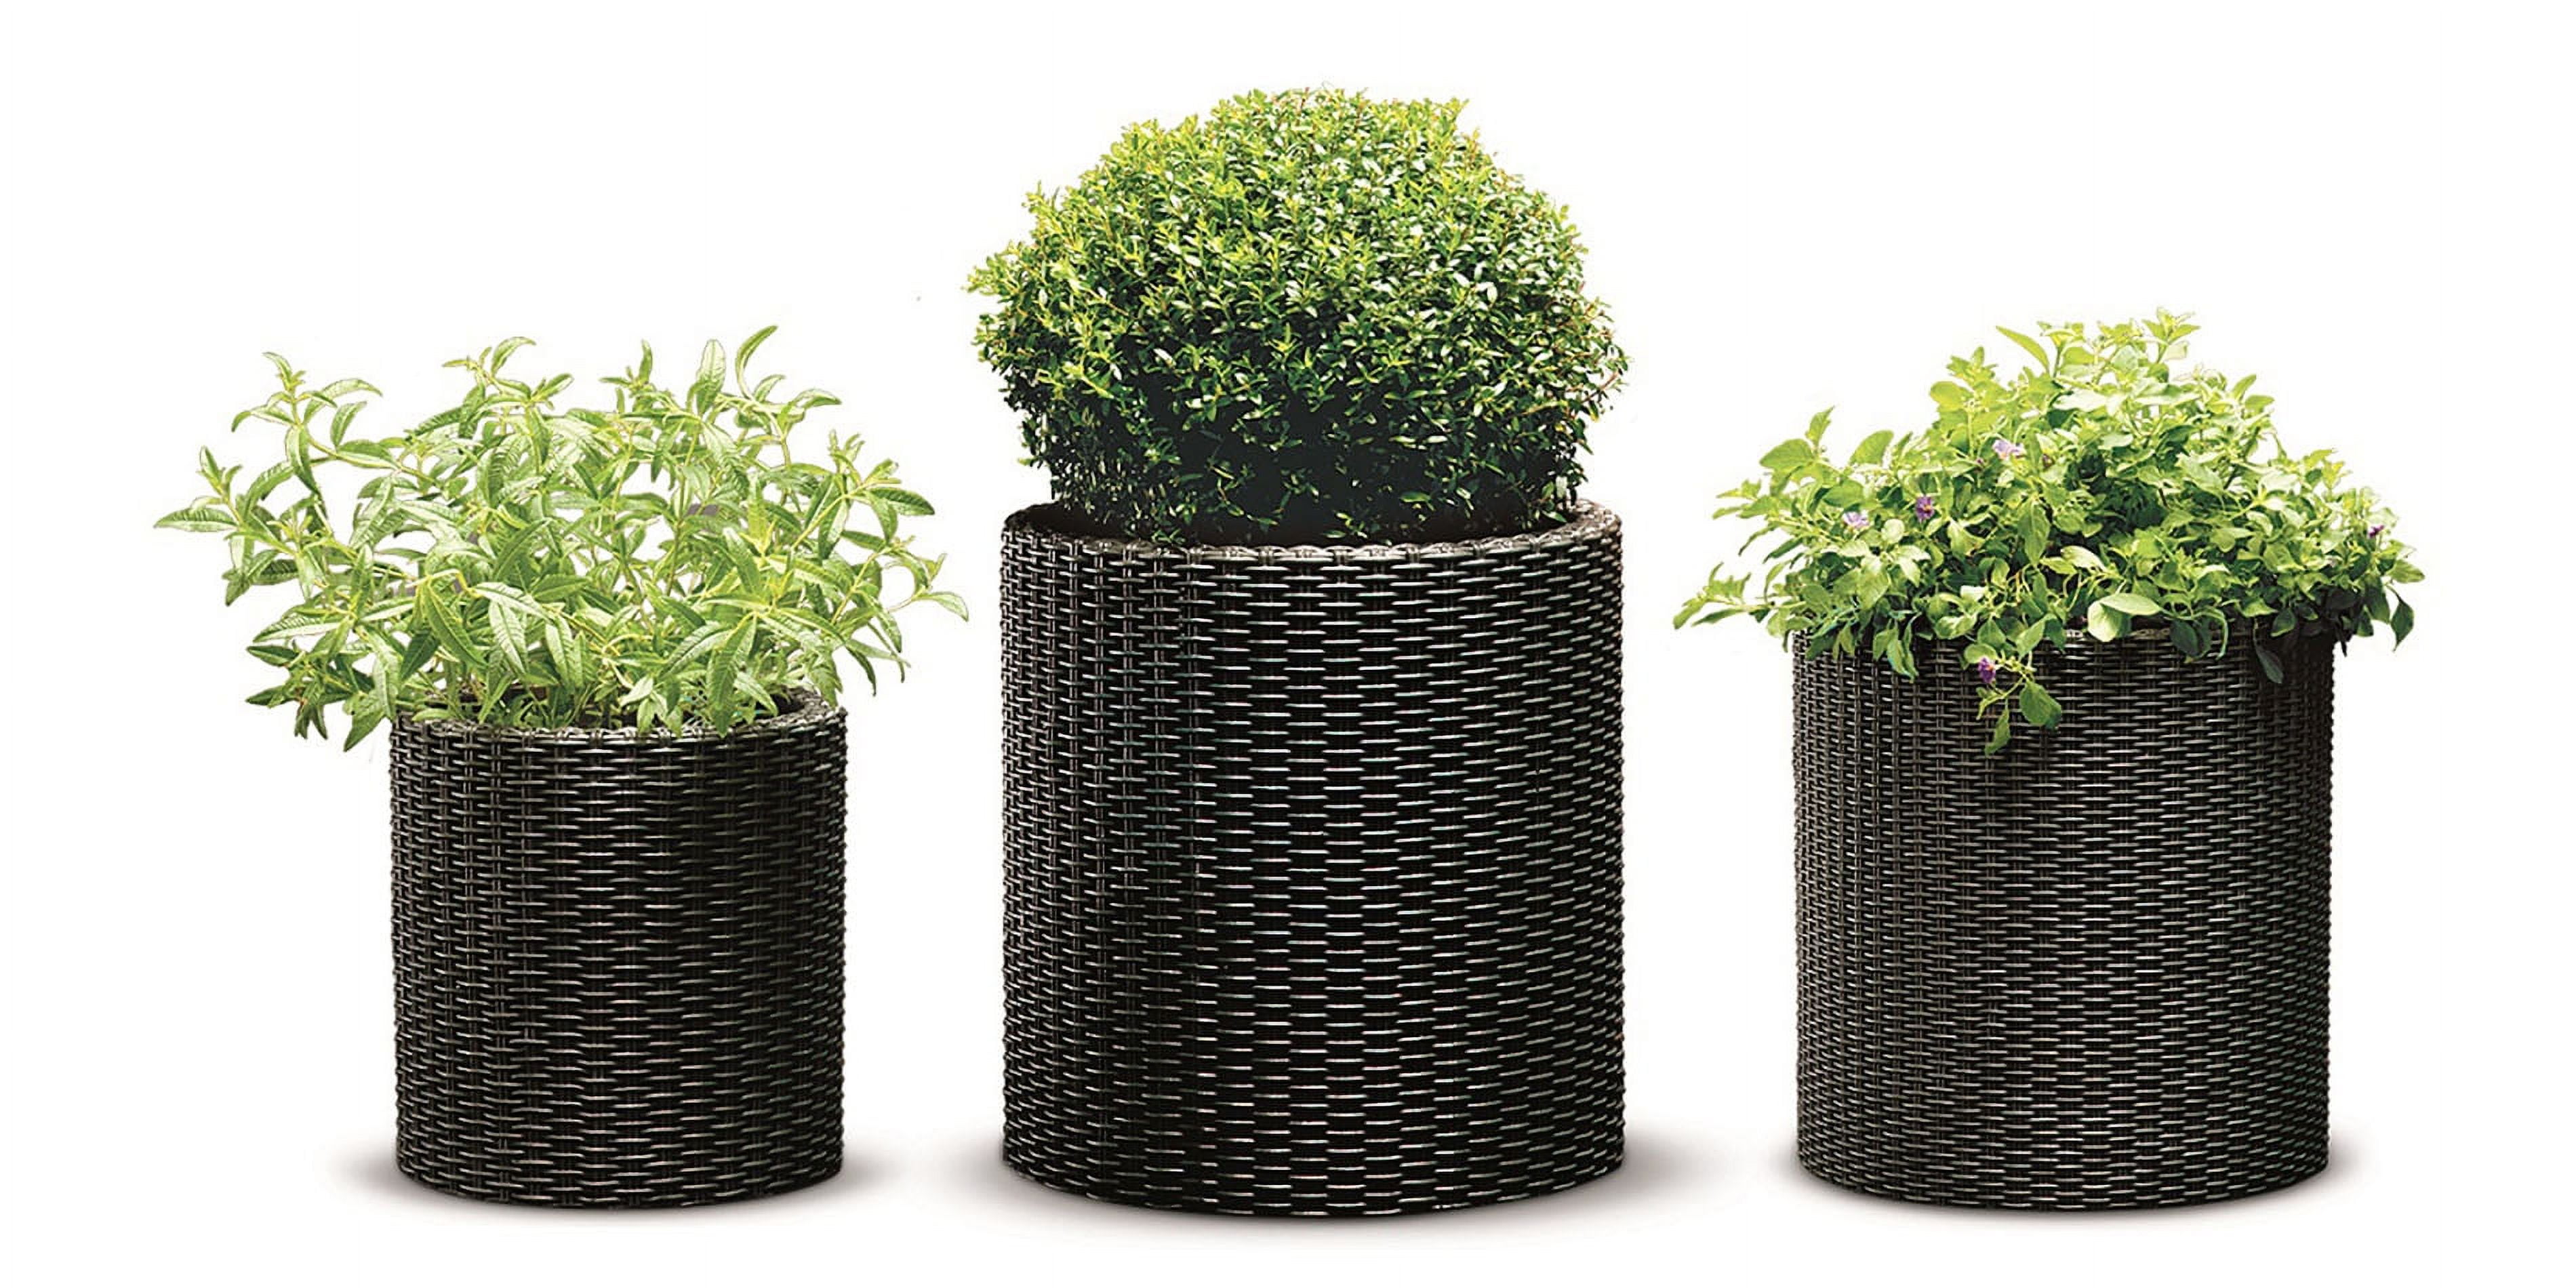 Rusty Outdoor Pots Set of 3- Plastic Planter